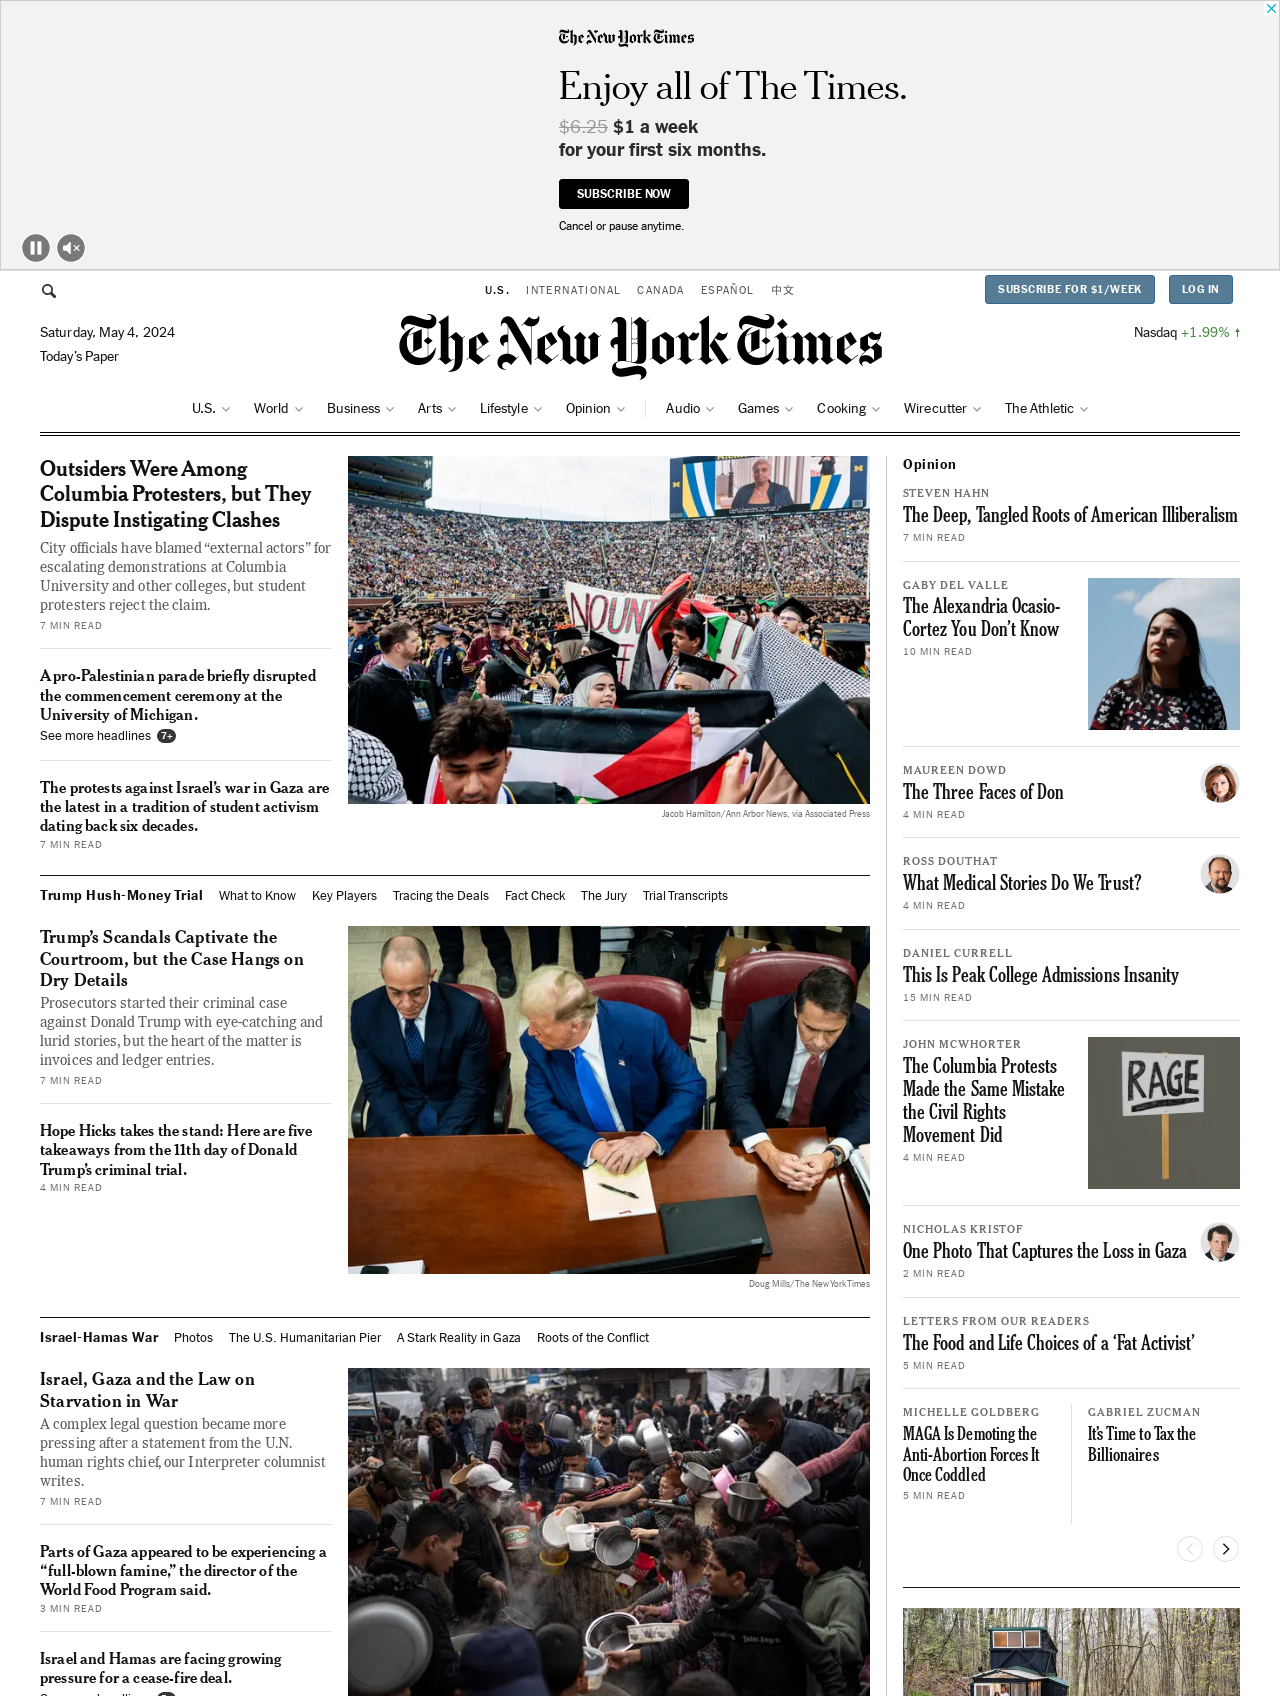 New York Times snapshot